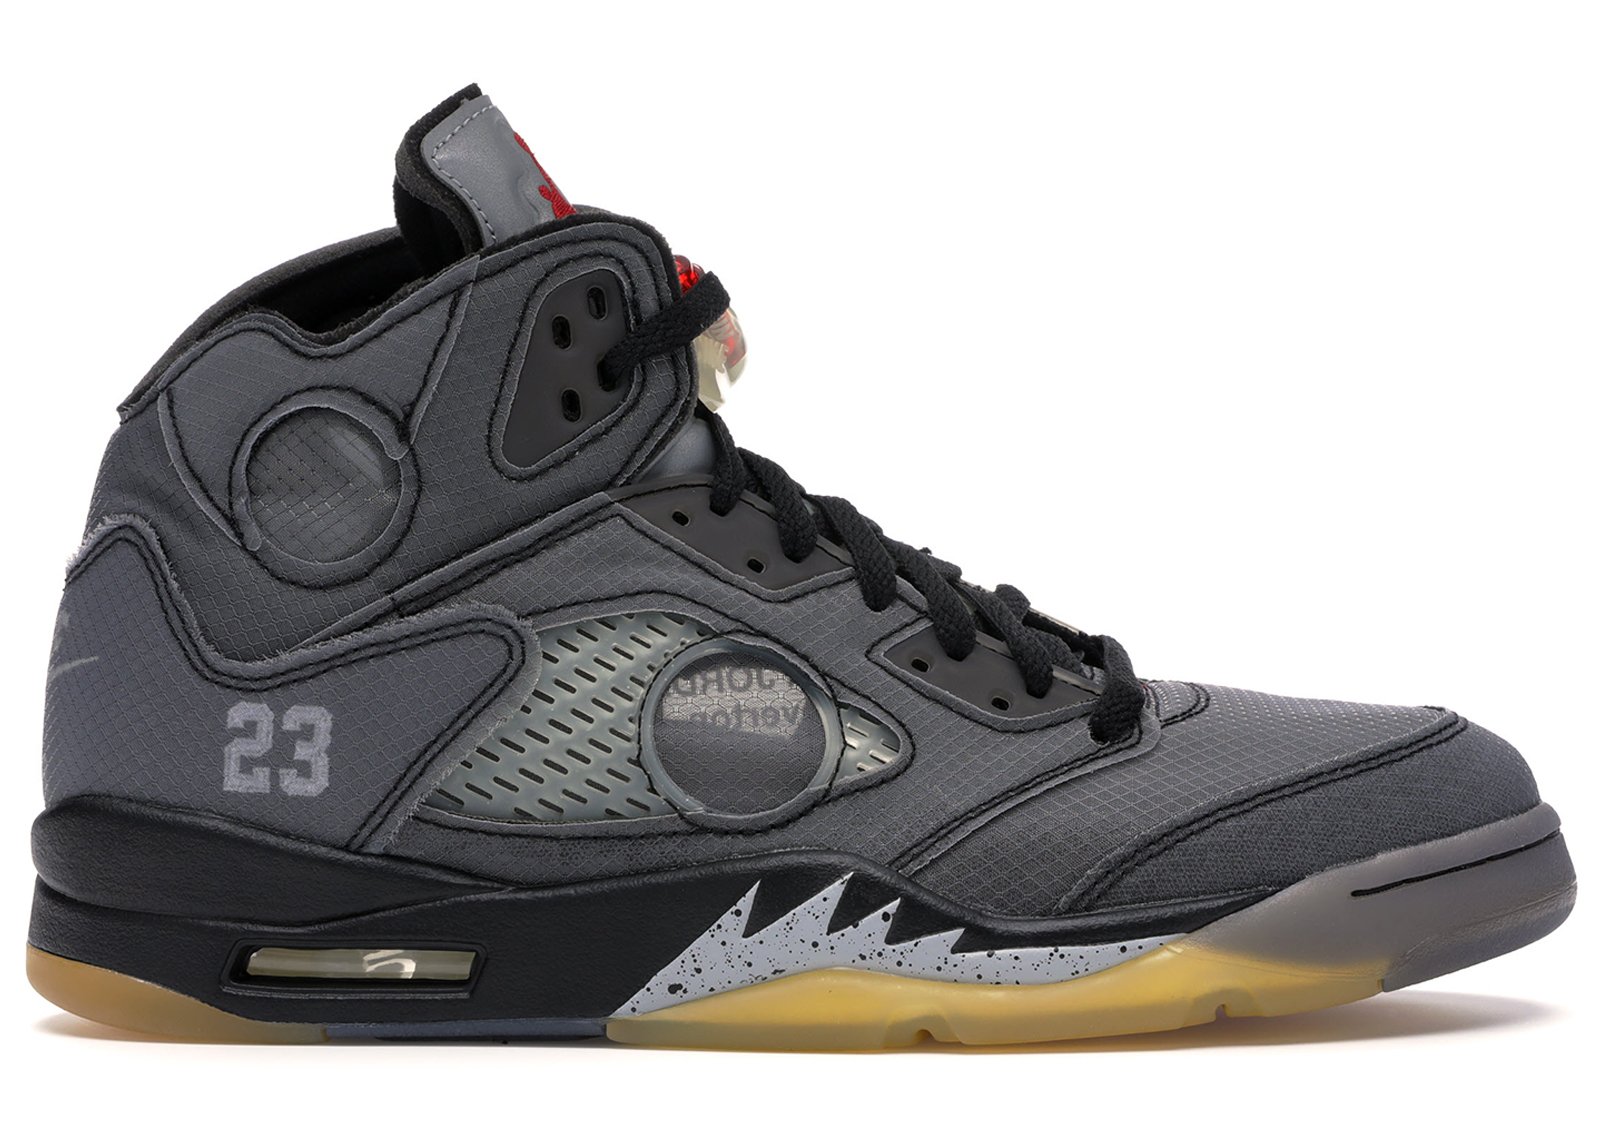 Jordan 5 Retro Off-White Black sneakers